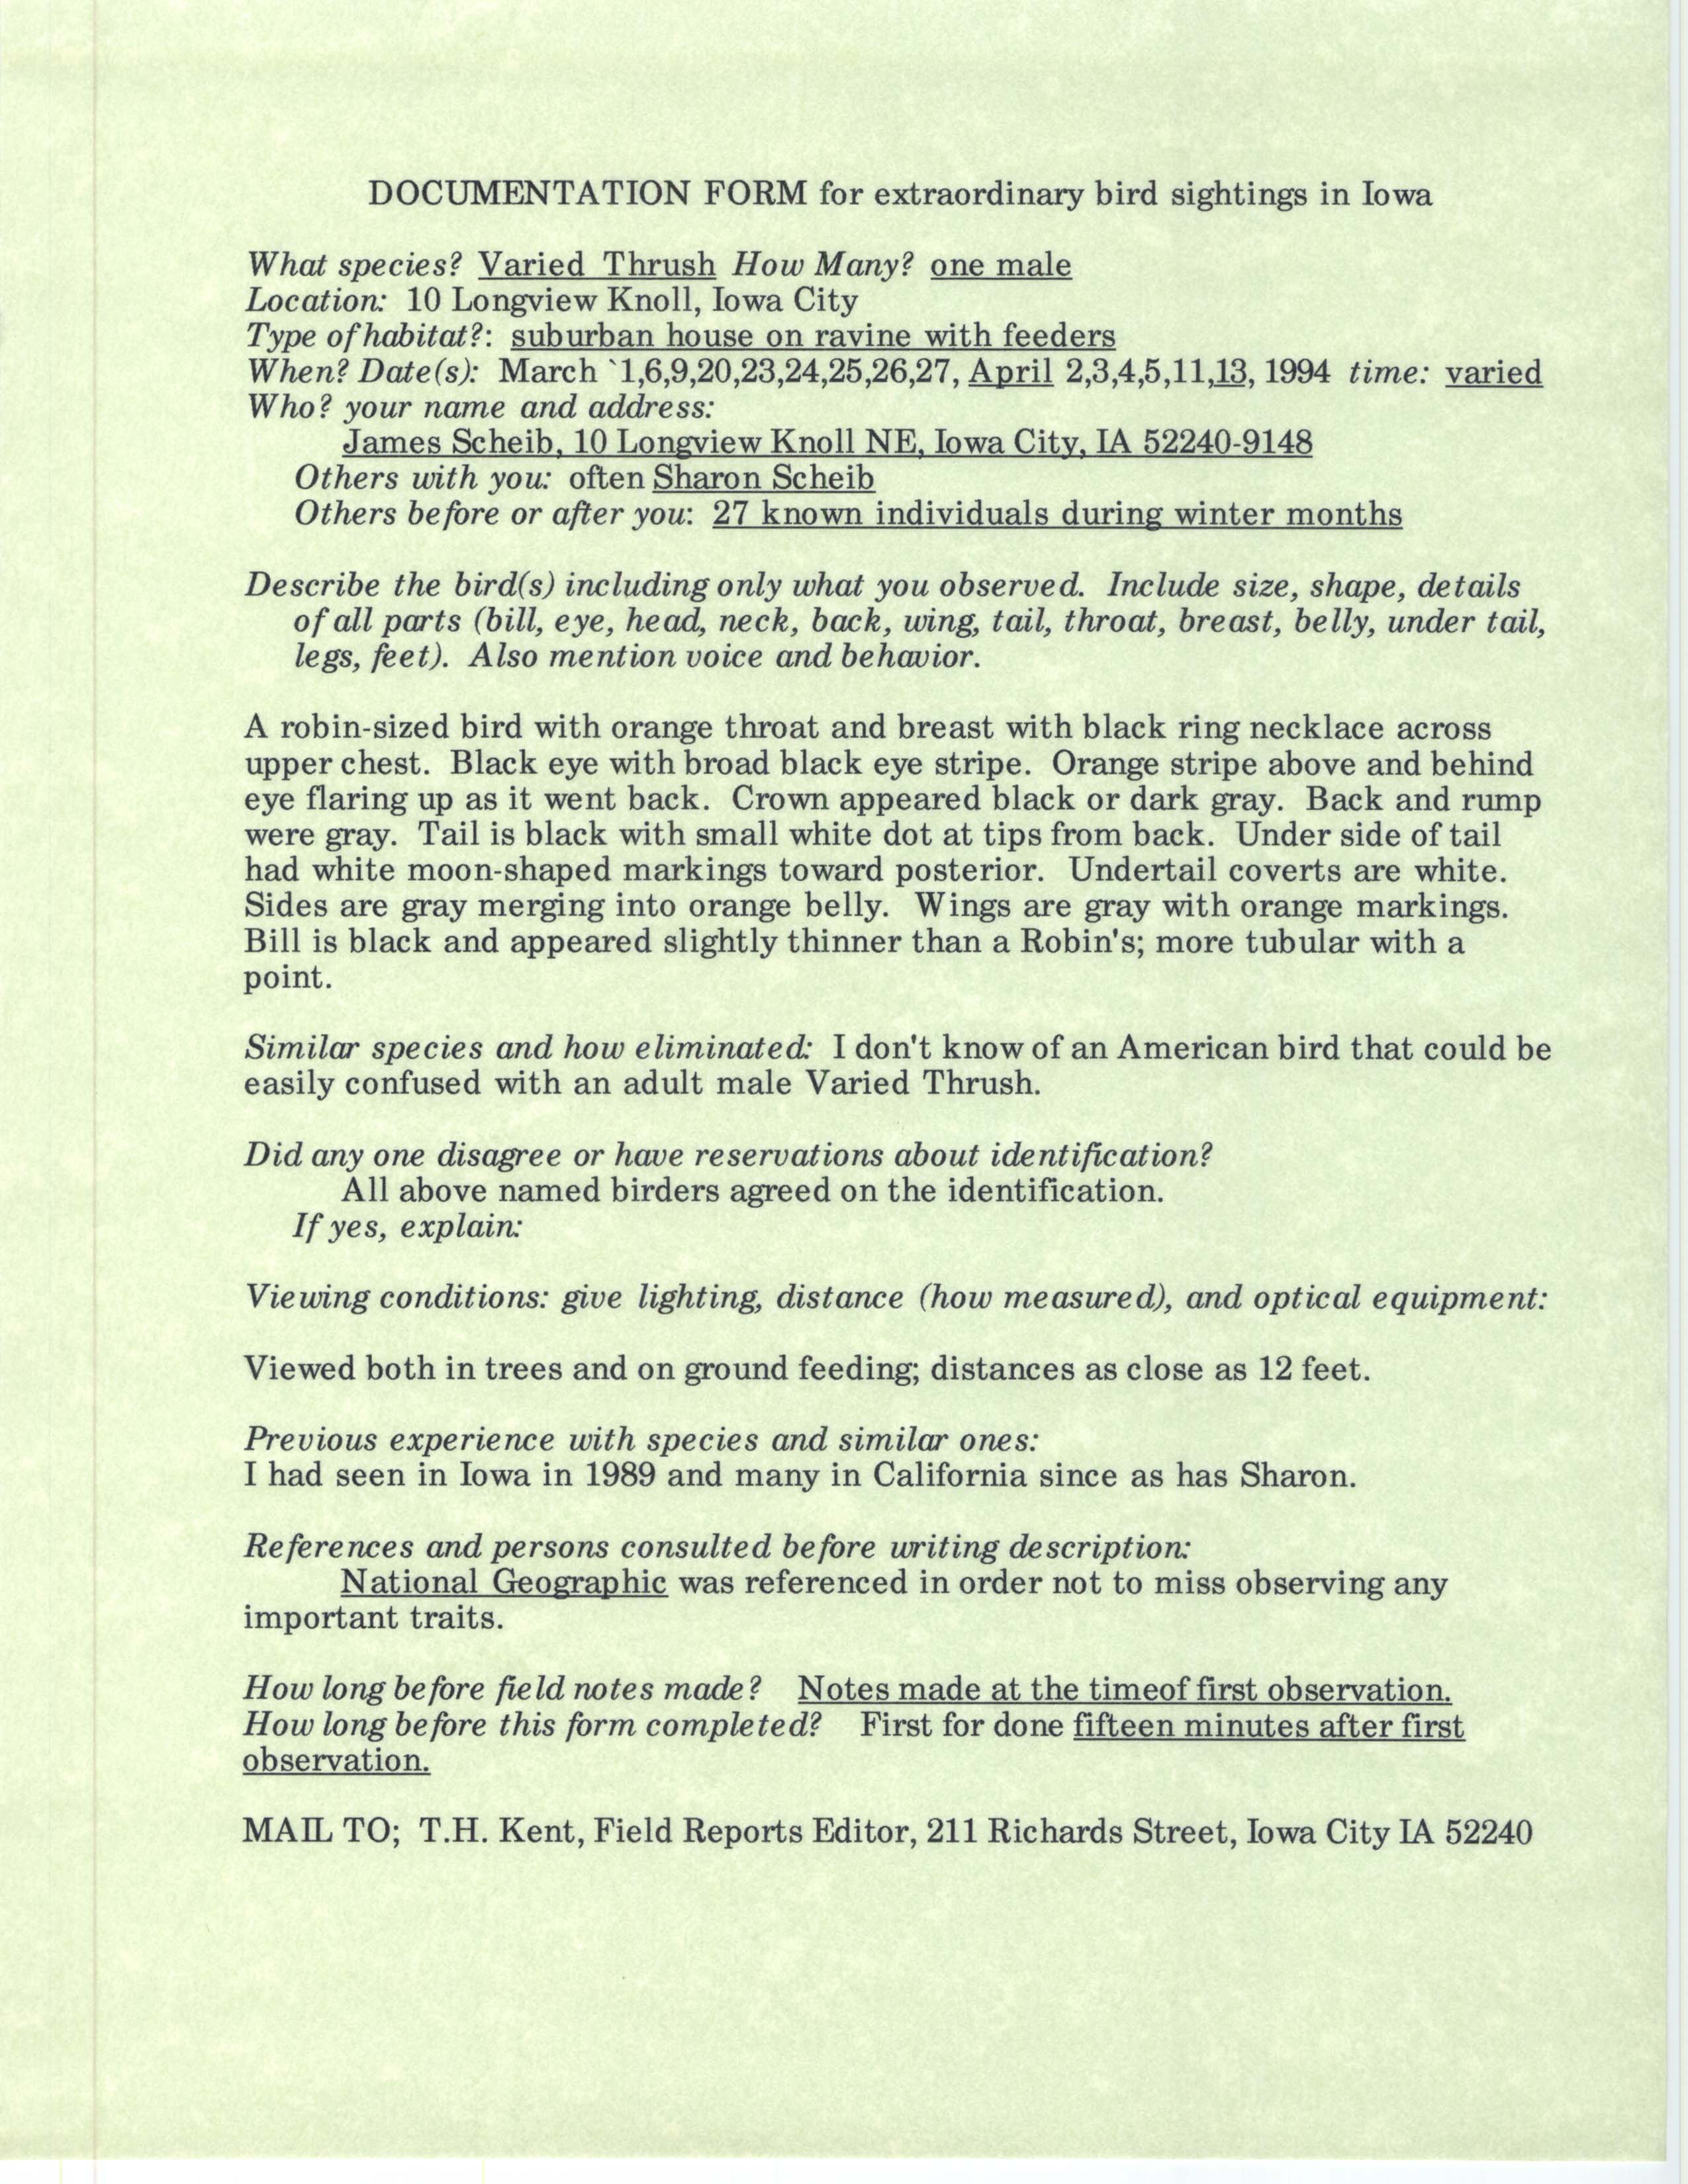 Rare bird documentation form for Varied Thrush at Iowa City in 1994